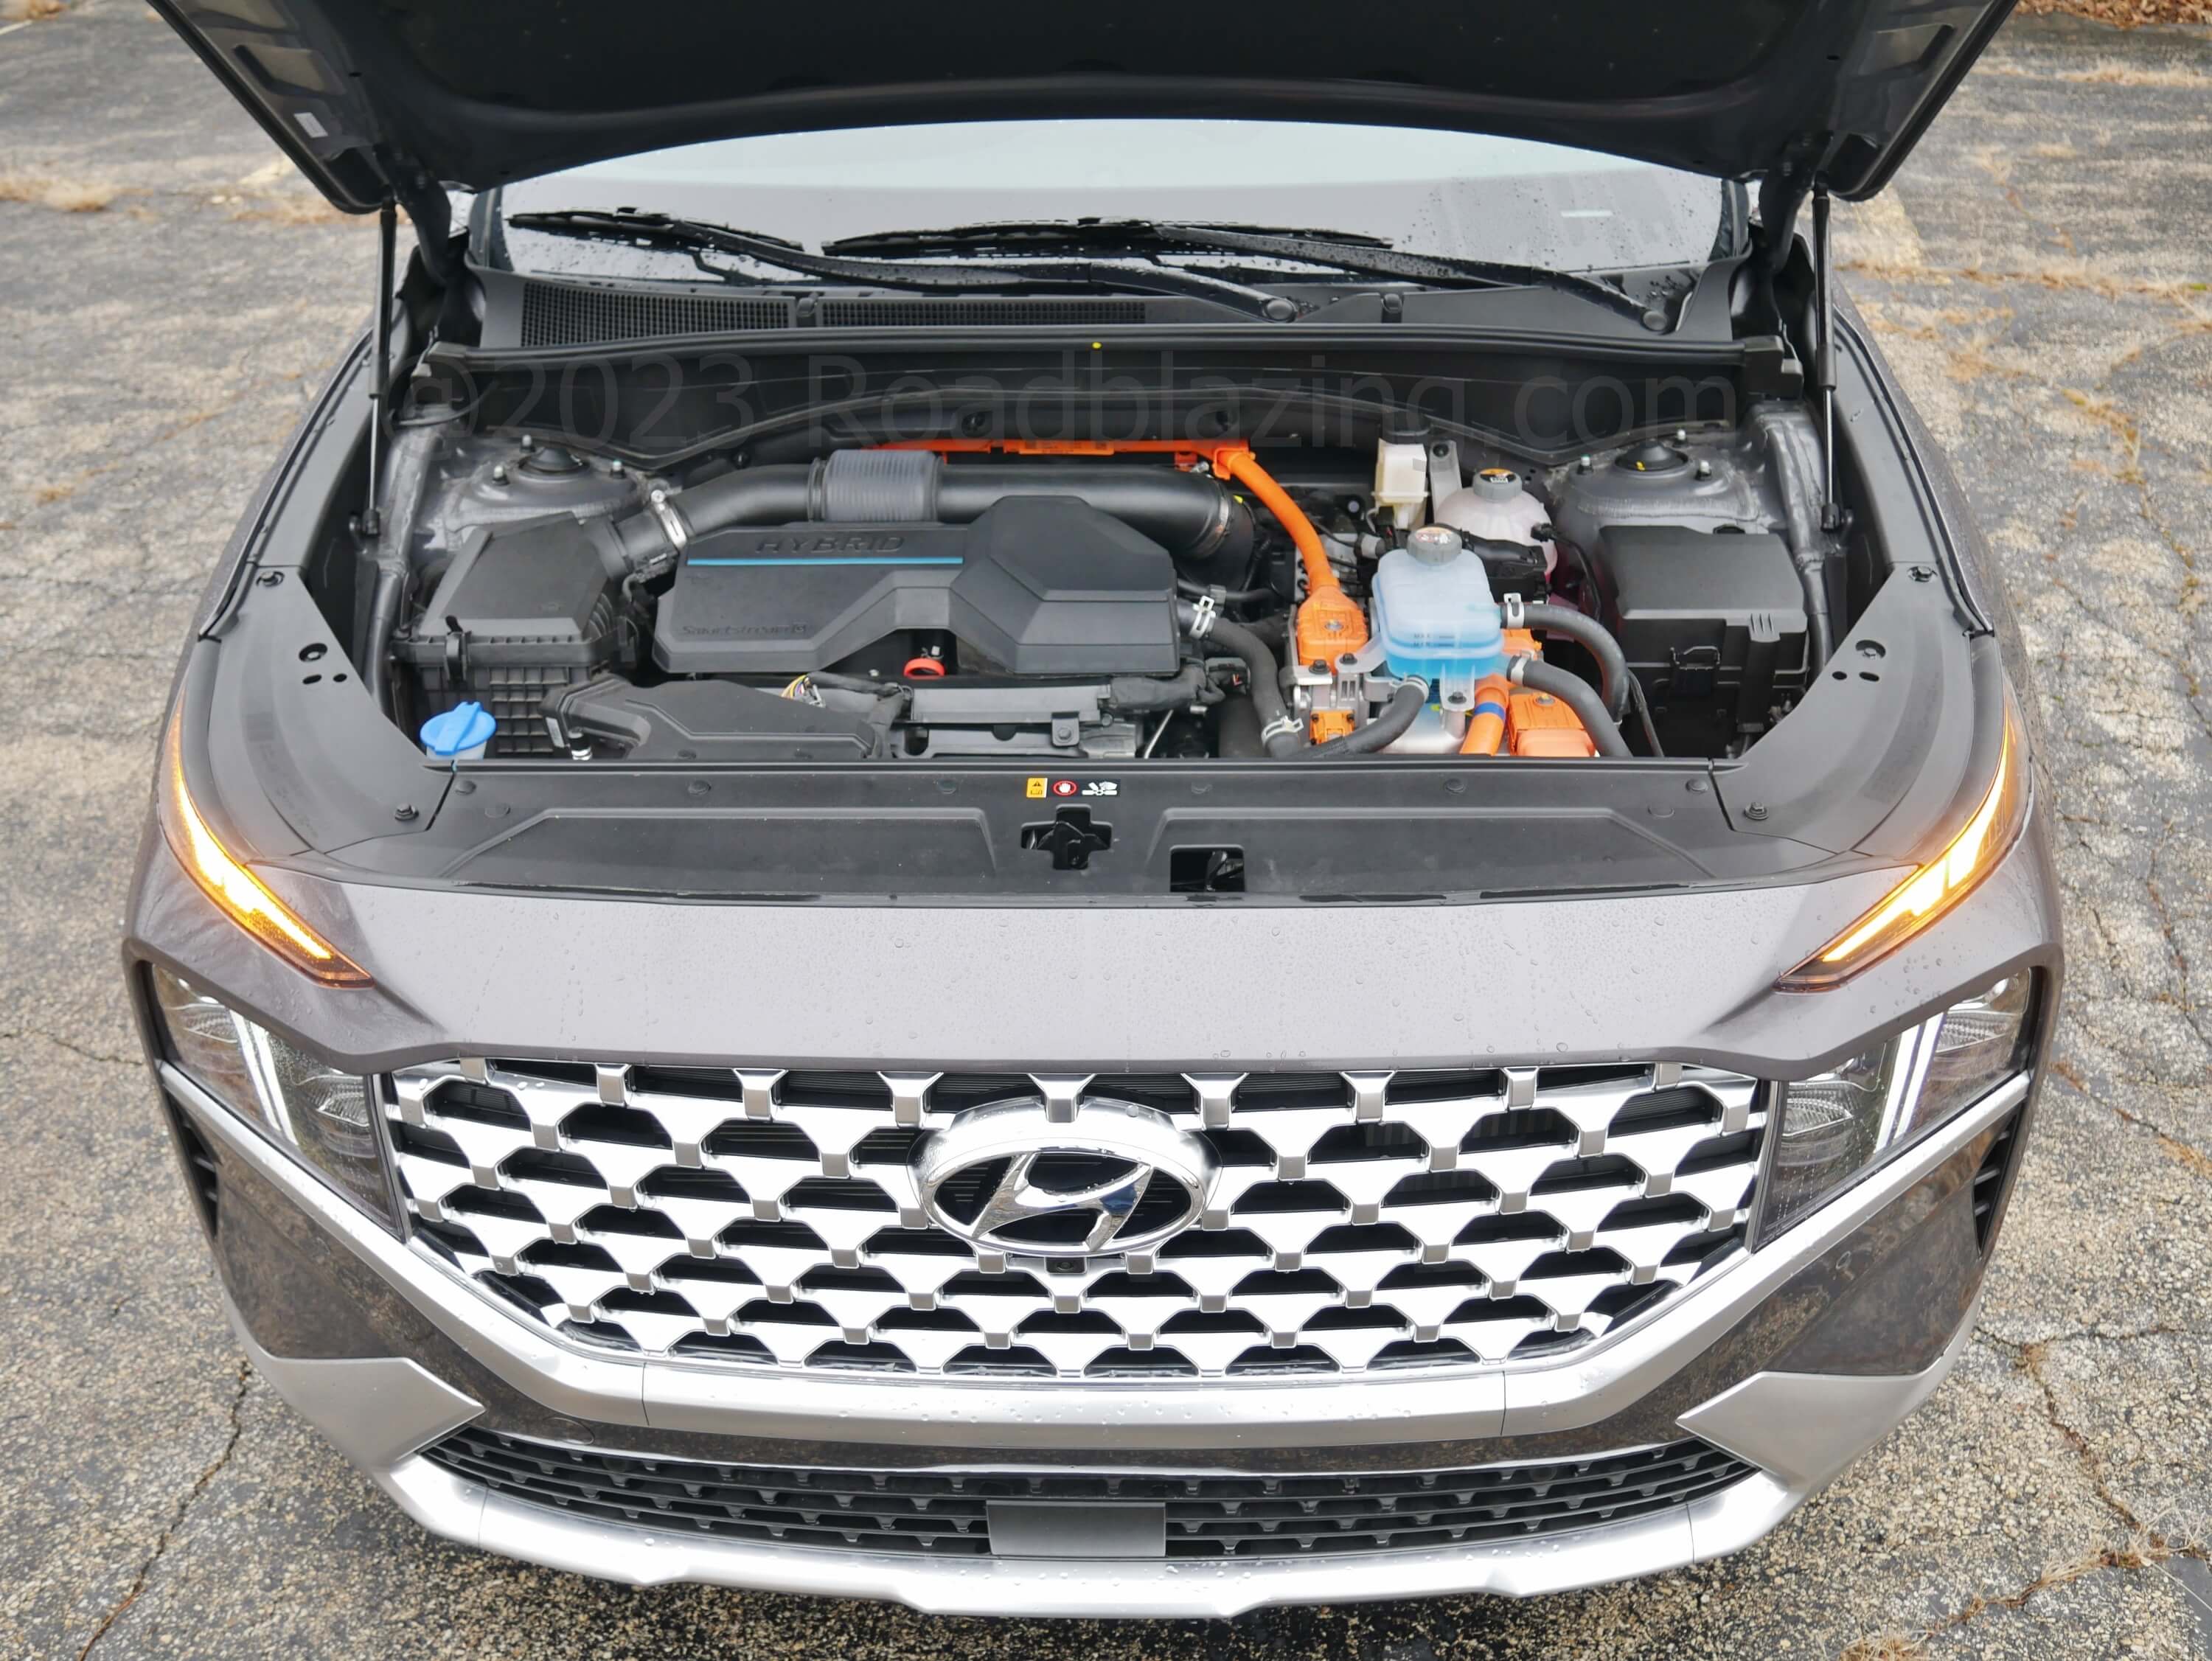 2022 Hyundai Santa Fe Limited PHEV AWD: 1.6L turbo engine adds 90 hp AC motor boost + 32 miles EV range + conventional 6-spd automatic + AWD